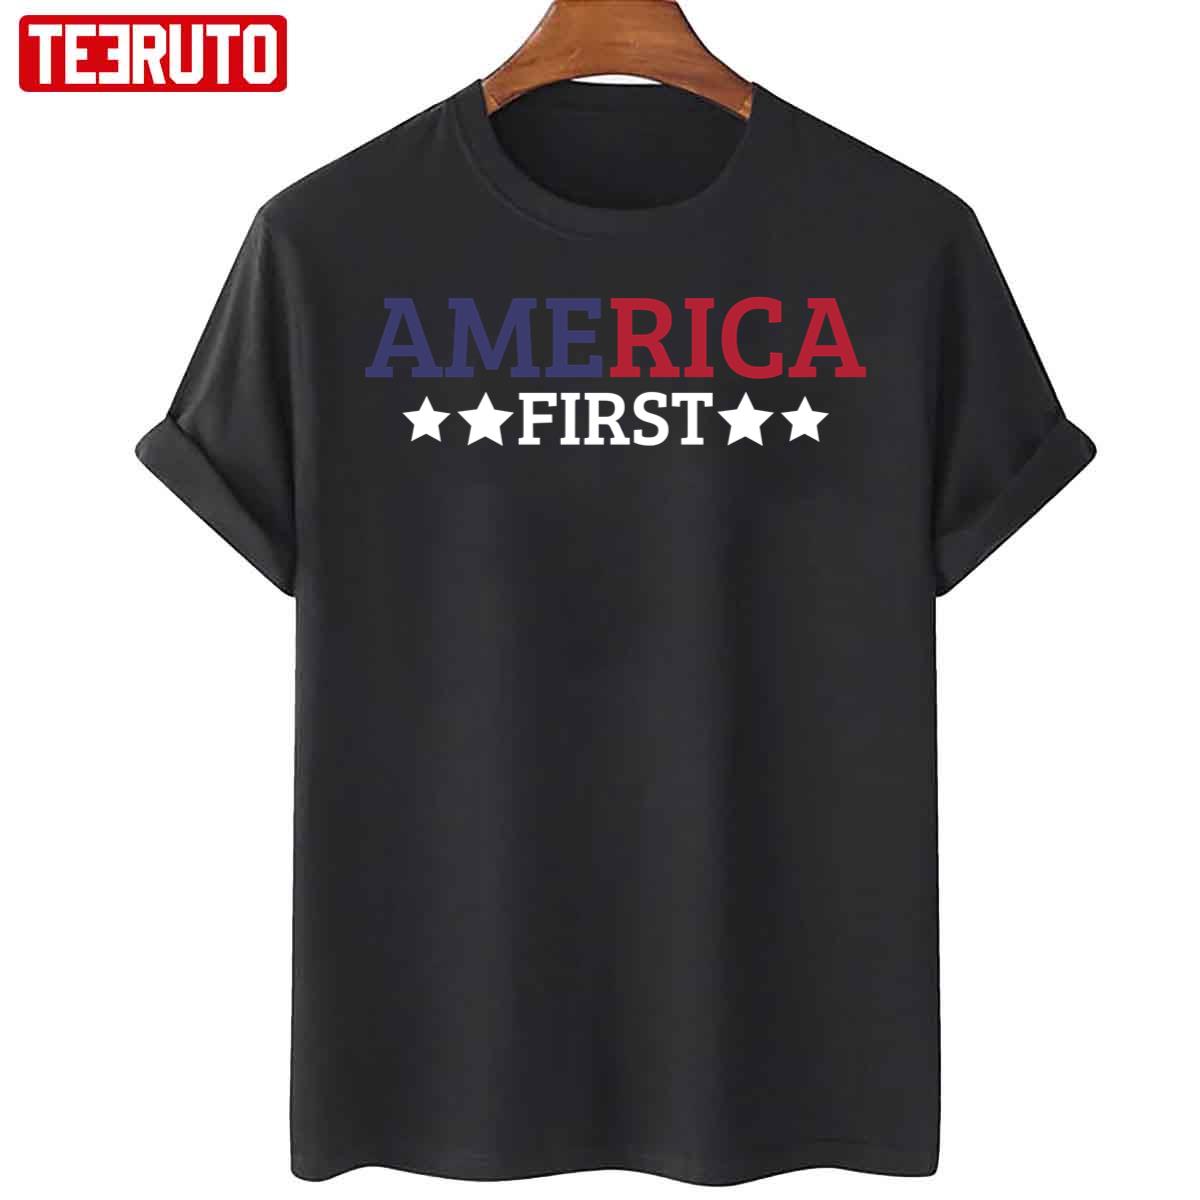 America First Unisex T-Shirt